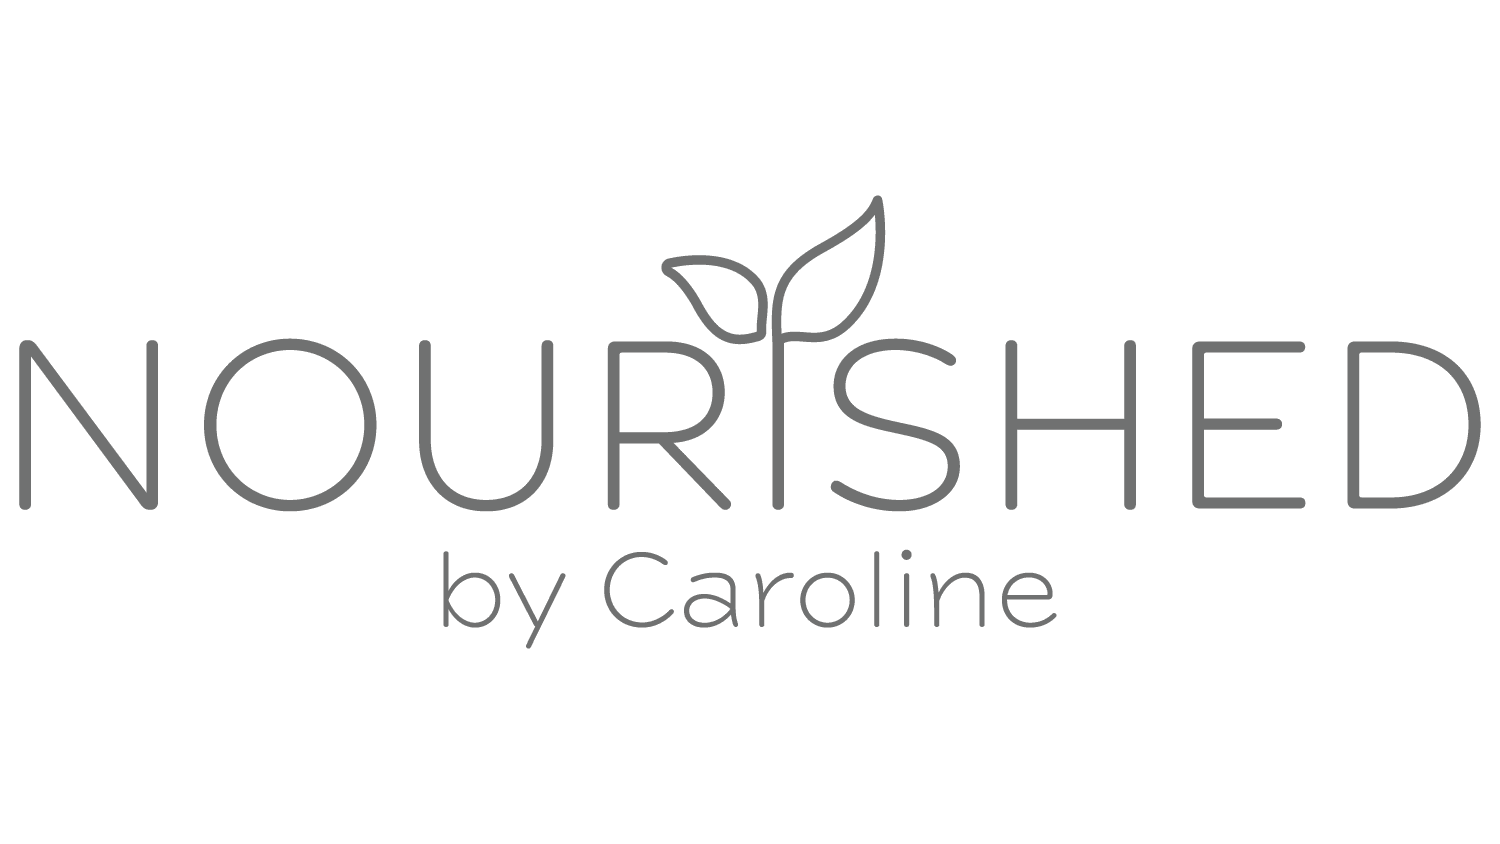 Nourished-by-Caroline